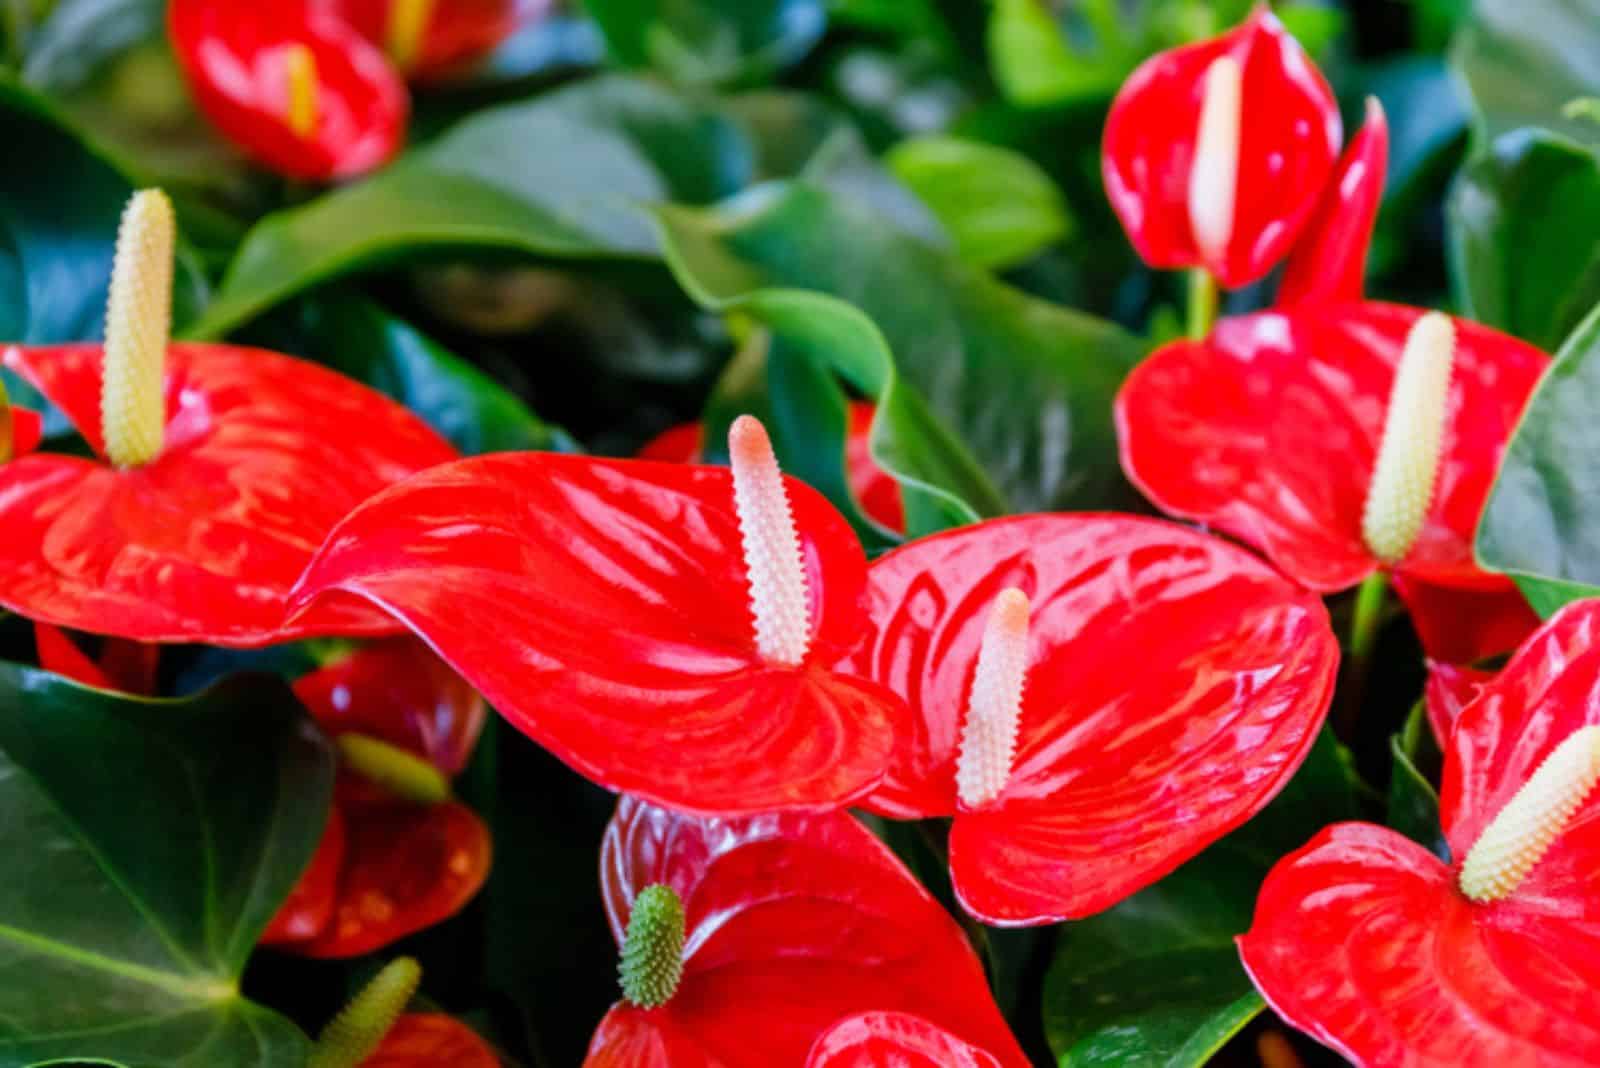 Red anthurium flowers